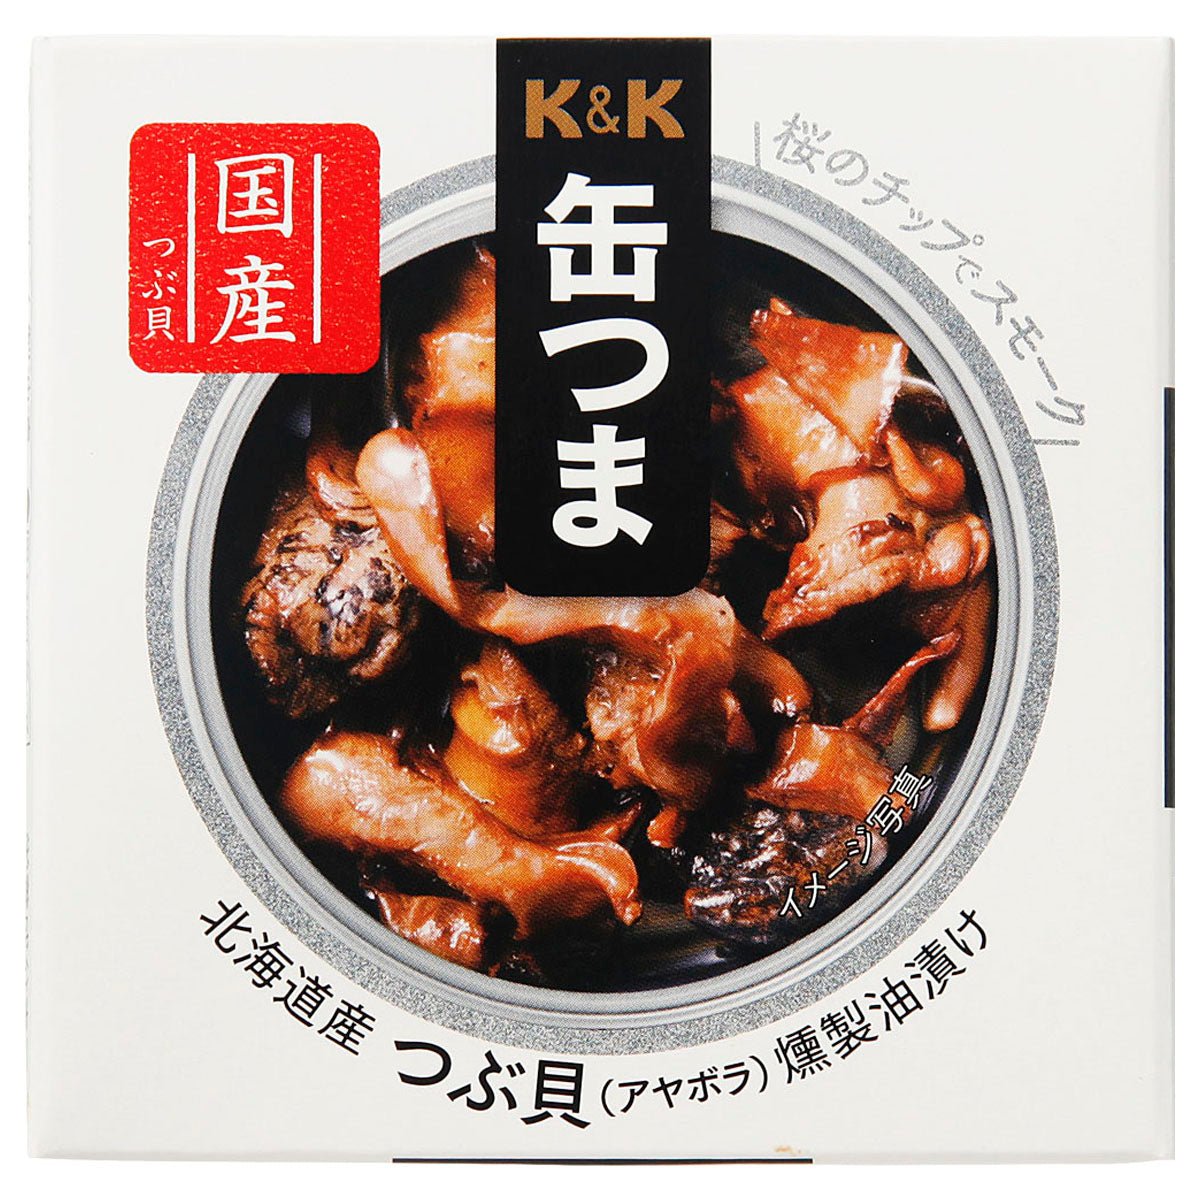 K & K CAN TSUMA HOKKAIDO TSUBU SHELLFISH OIL PICKLES